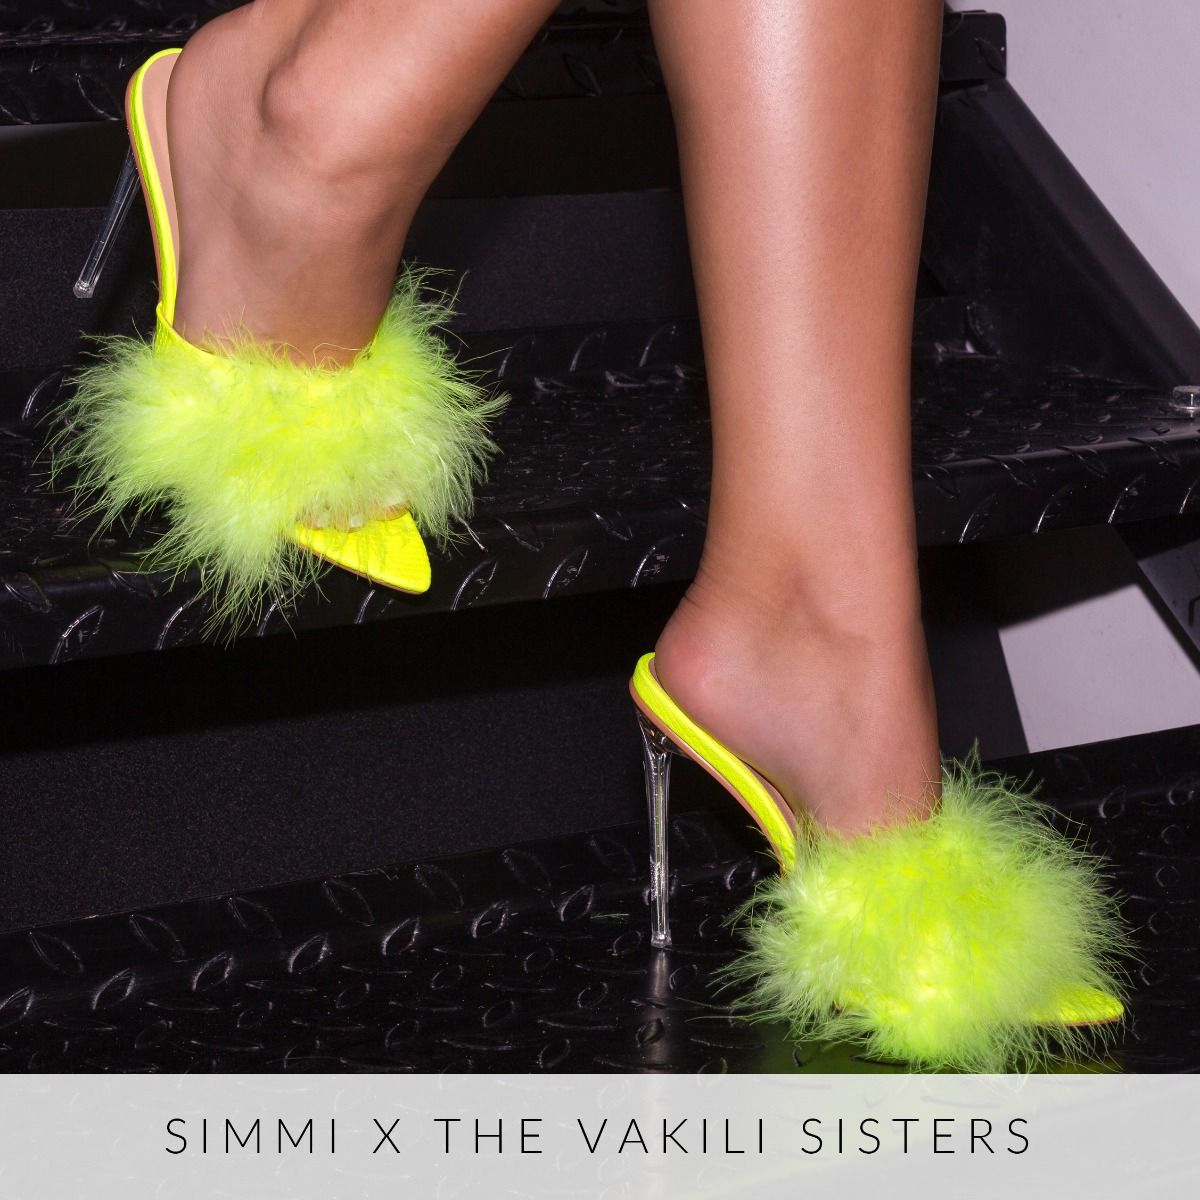 yellow faux fur heels